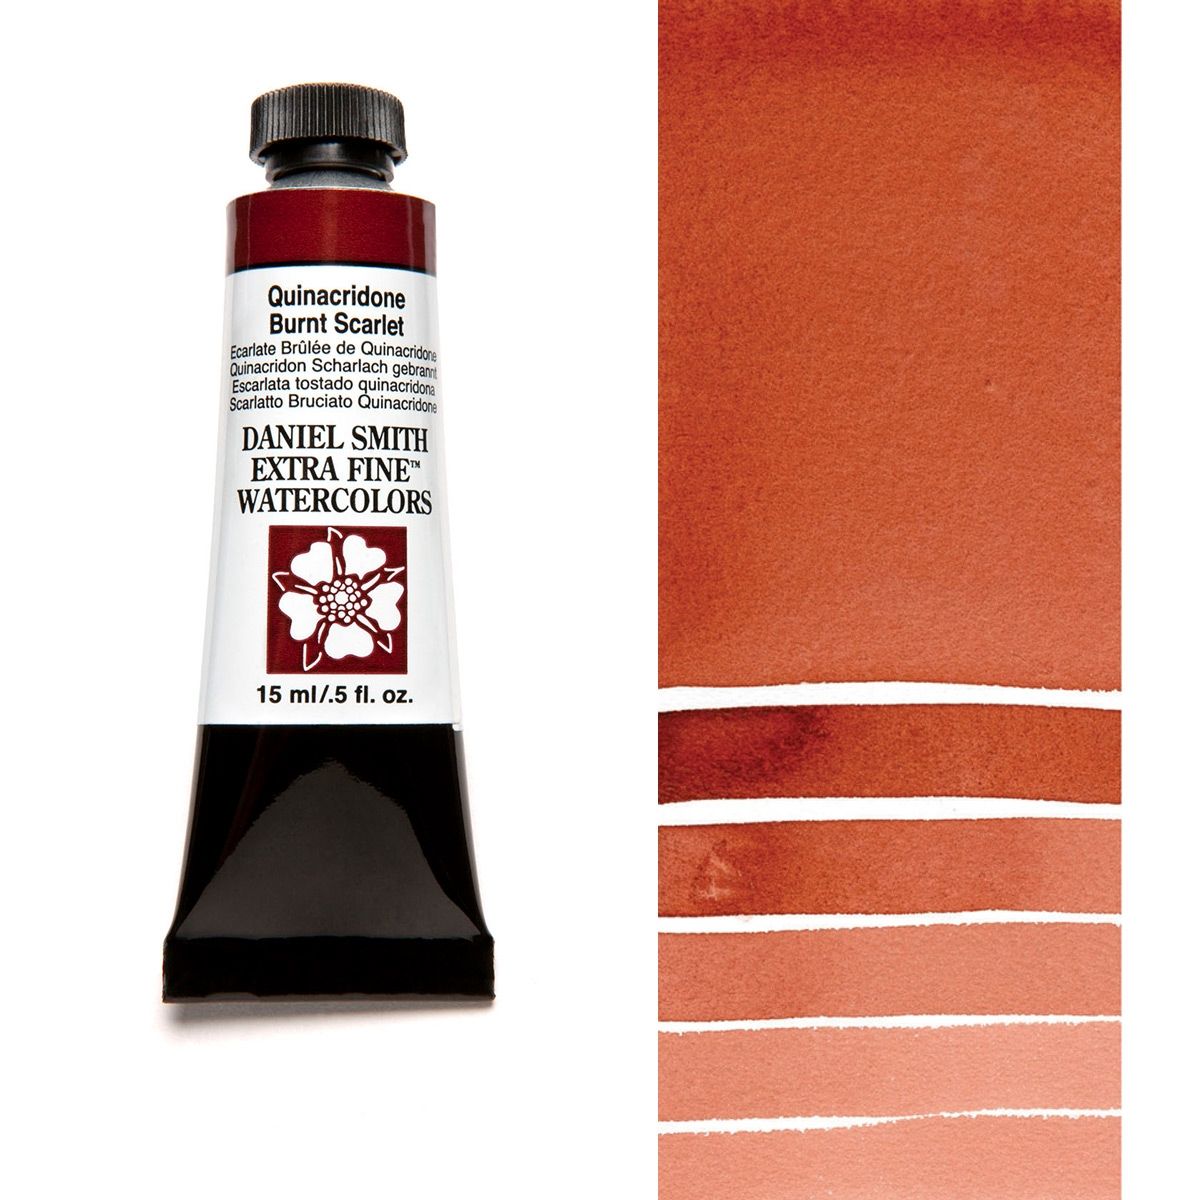 Daniel Smith Extra Fine Watercolors - Quinacridone Burnt Scarlet, 15 ml Tube